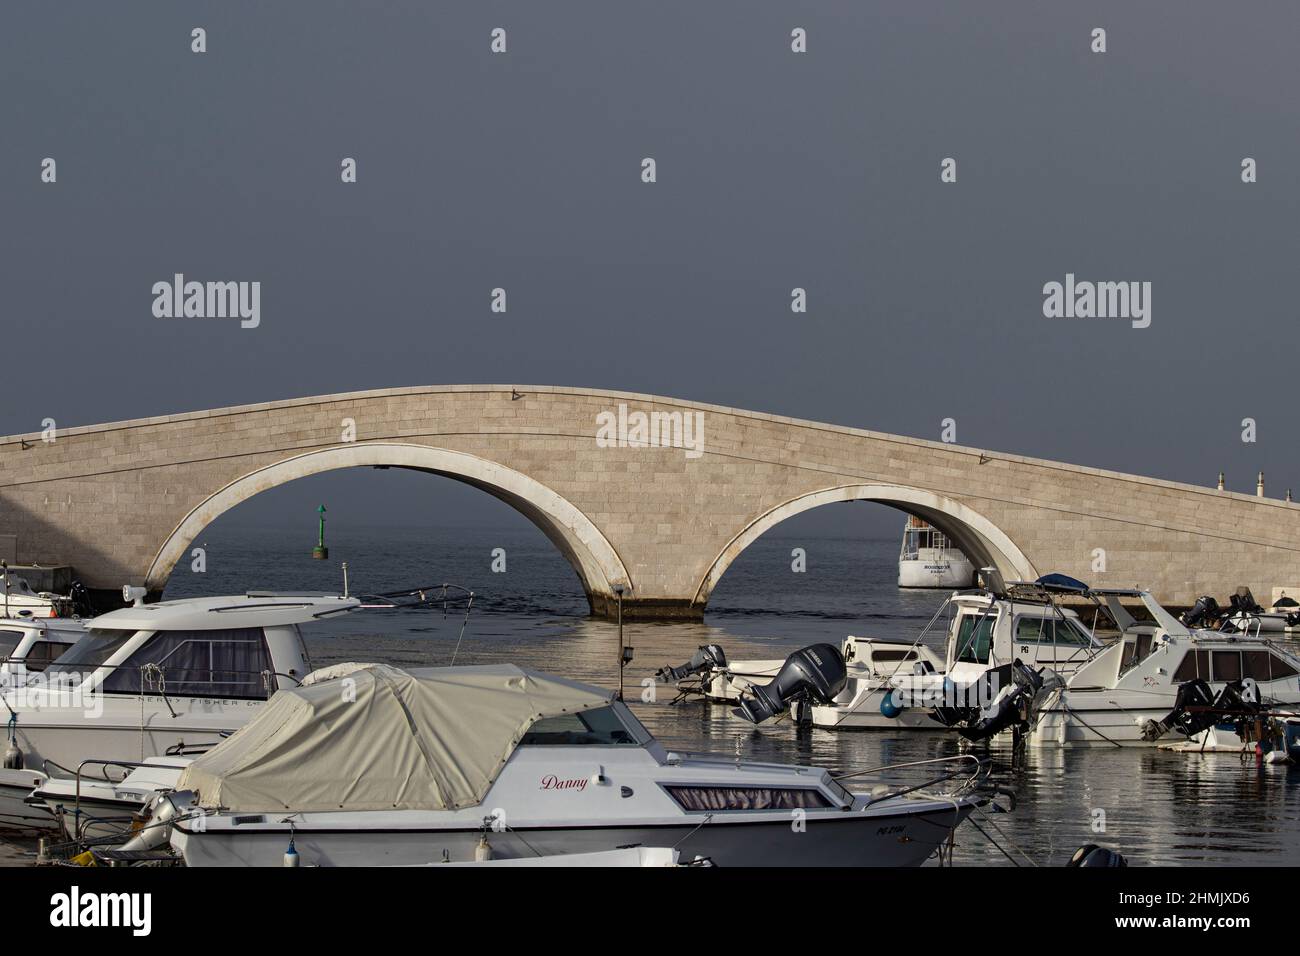 stone bridge in Venetian style Stock Photo